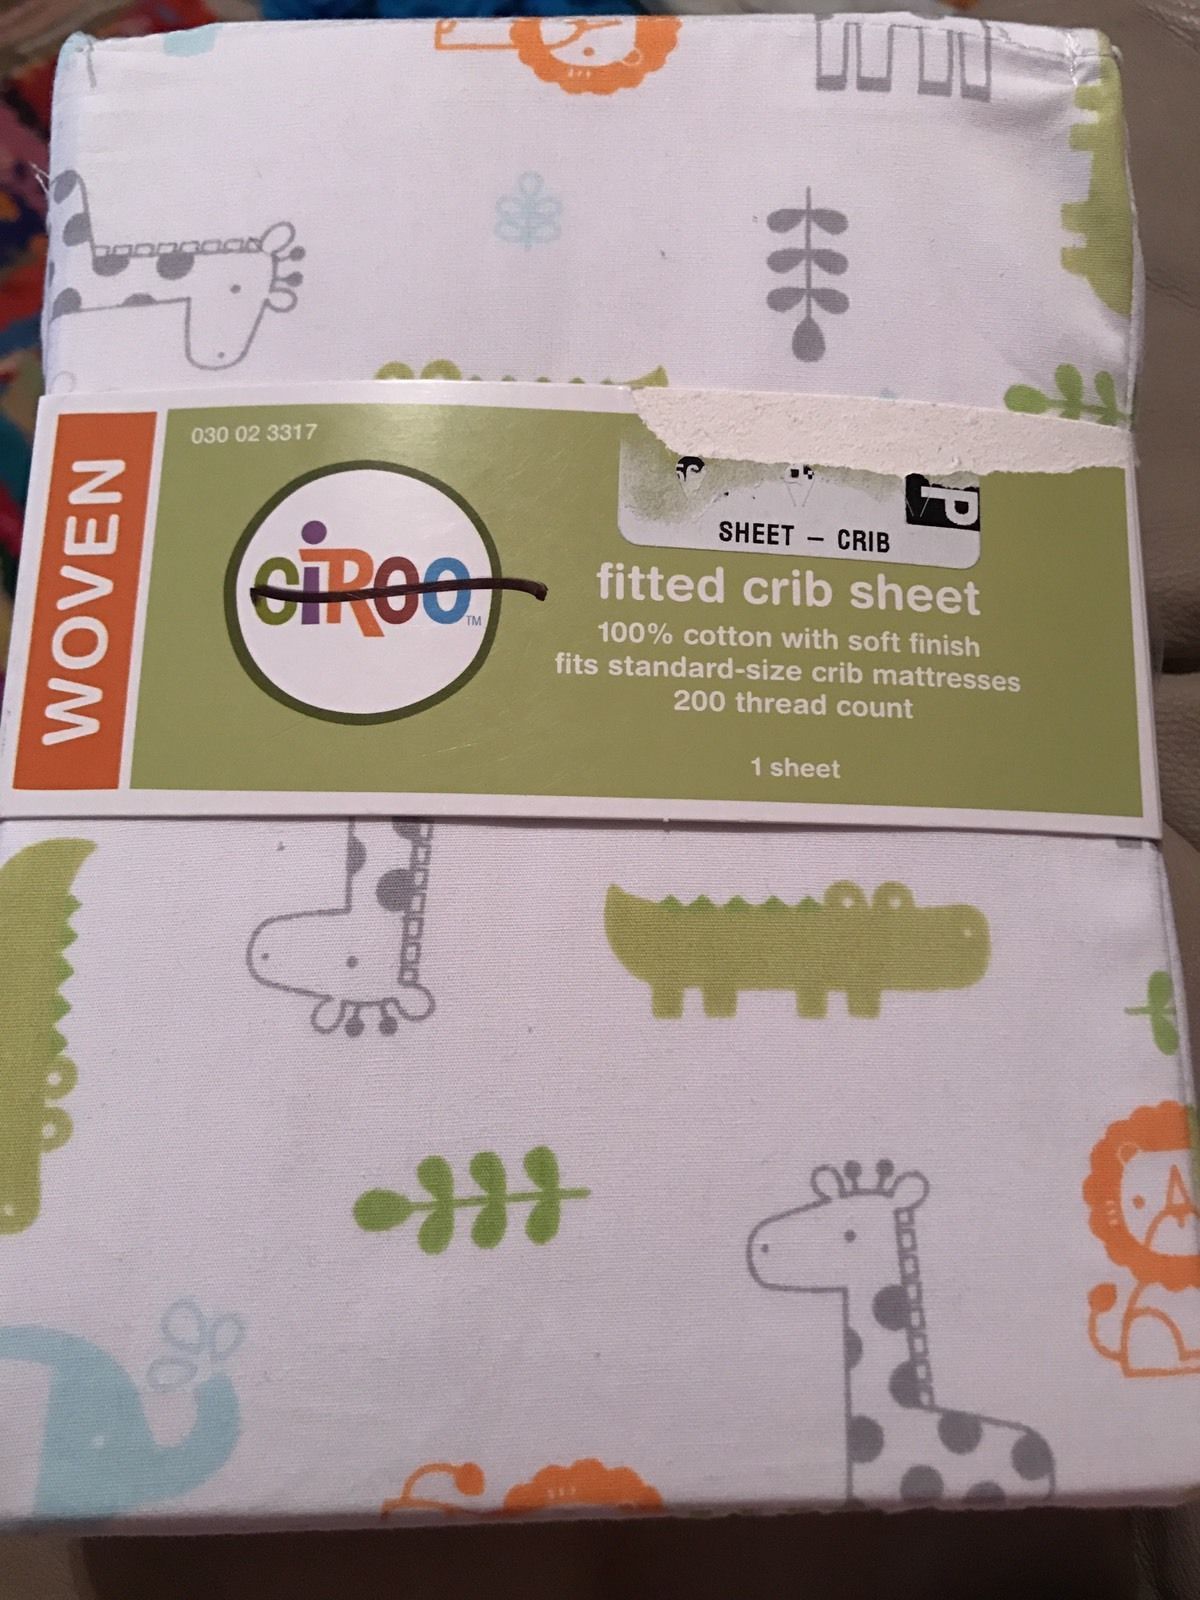 circo fitted crib sheet